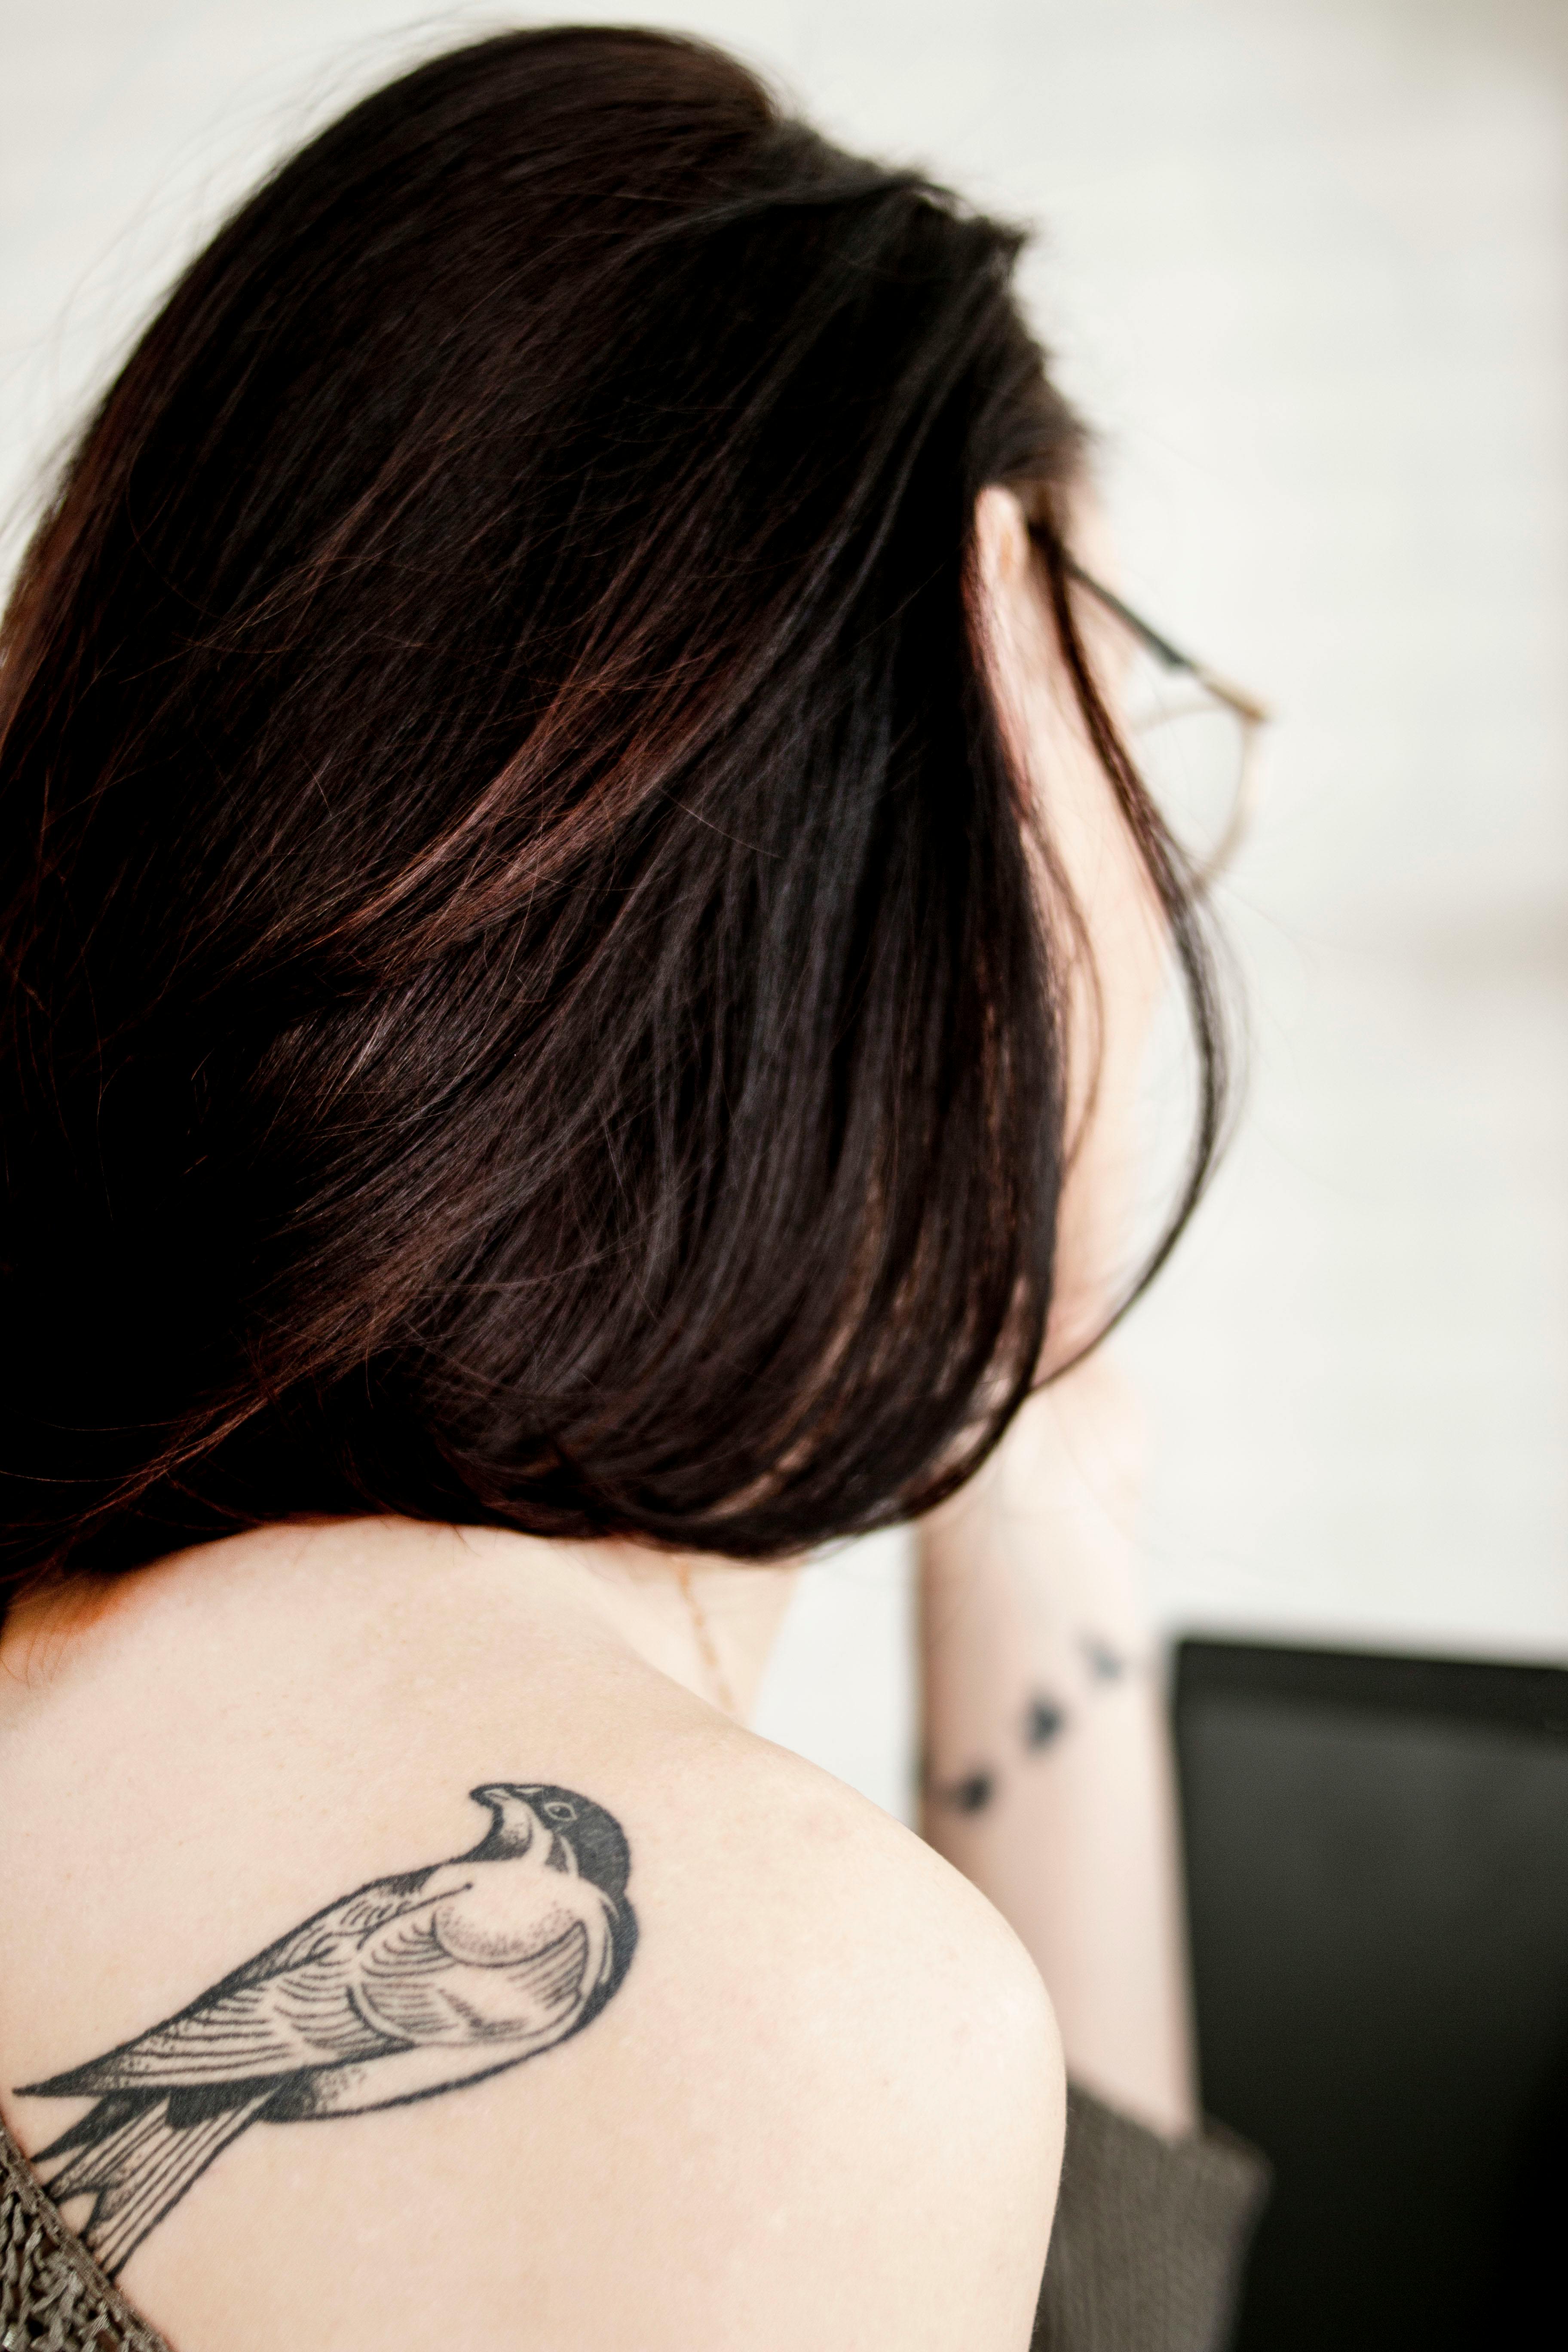 Rose Neck Tattoos - Best Tattoo Ideas Gallery | Rose neck tattoo, Flower neck  tattoo, Neck tattoos women